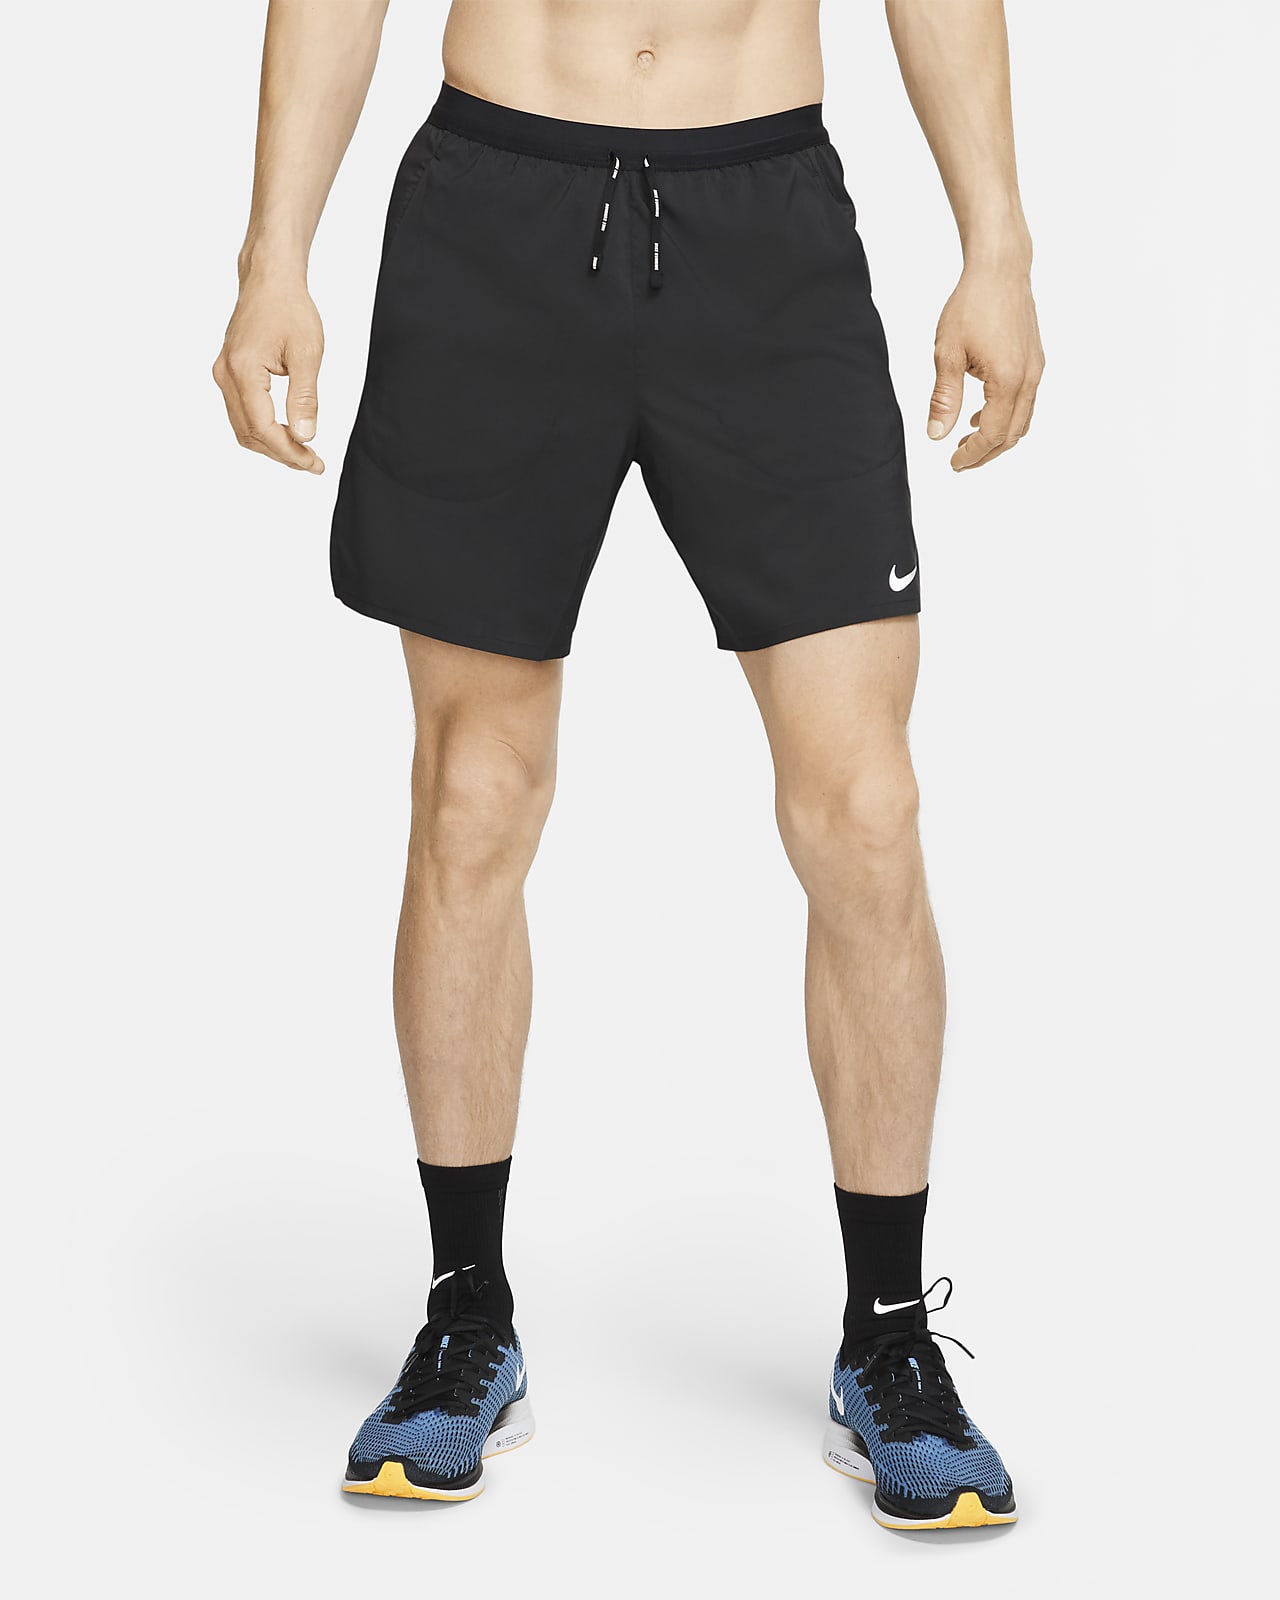 mens nike running shorts 7 inch